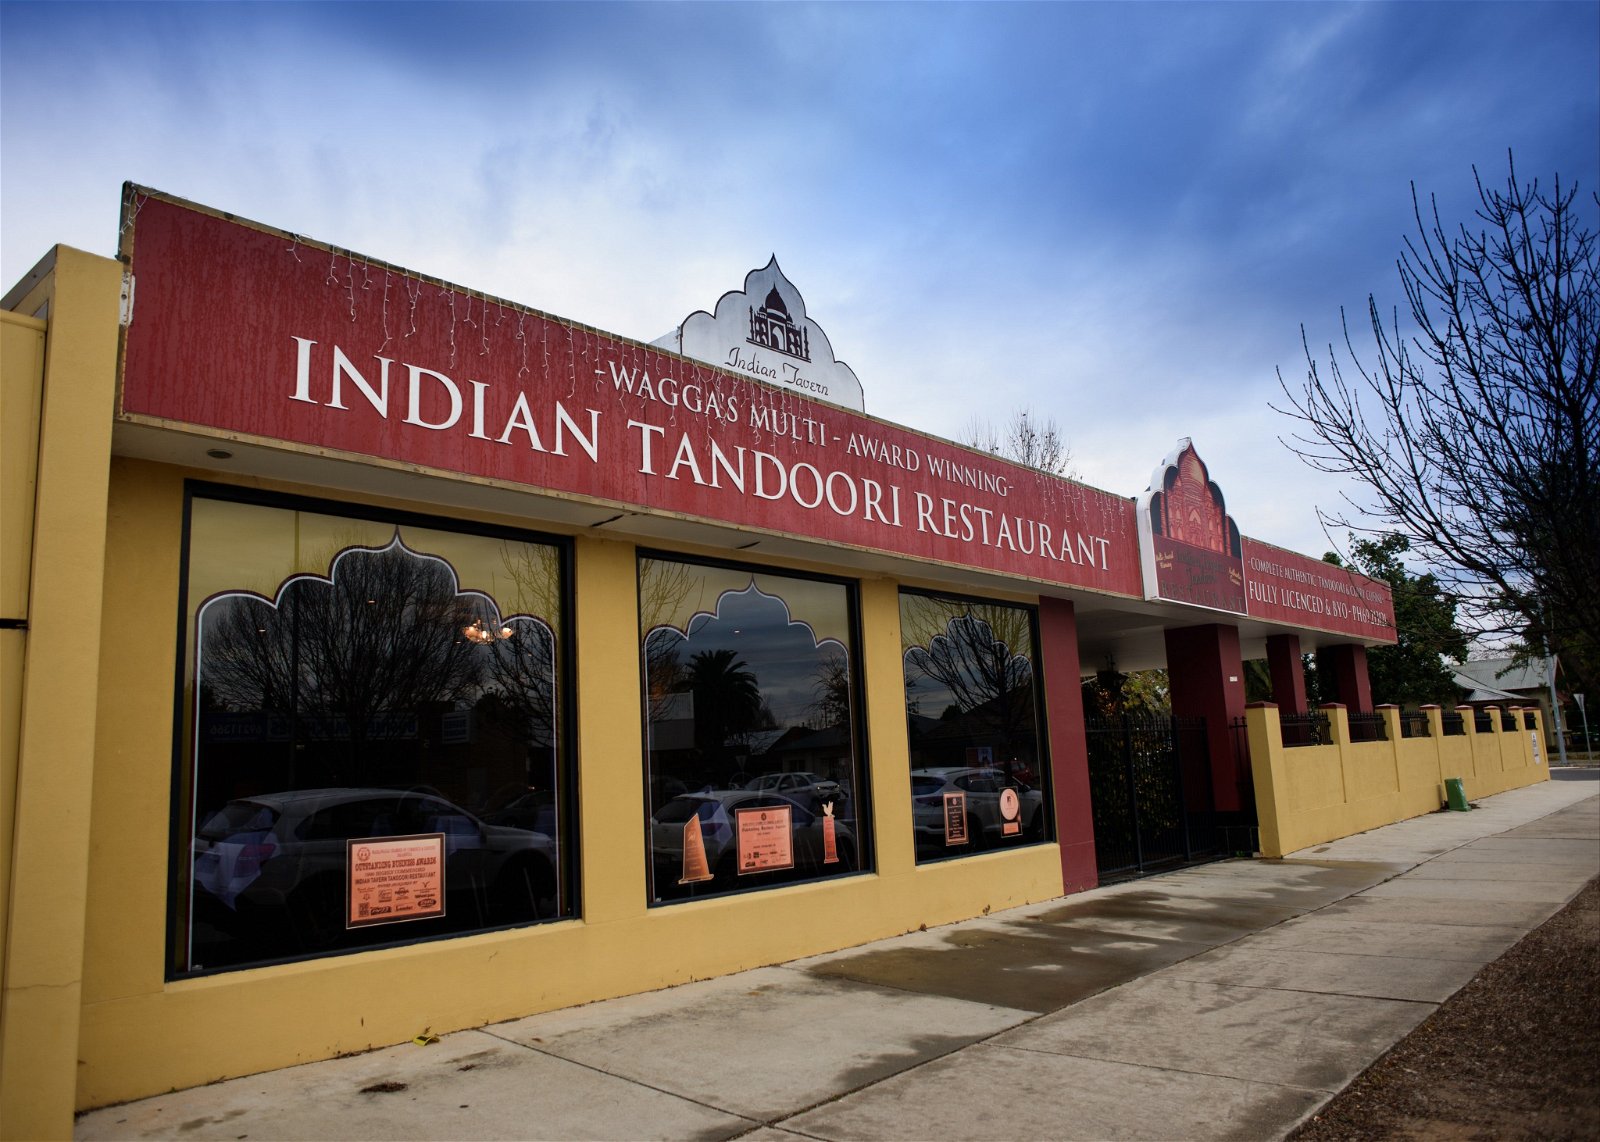 Indian Tavern Tandoori